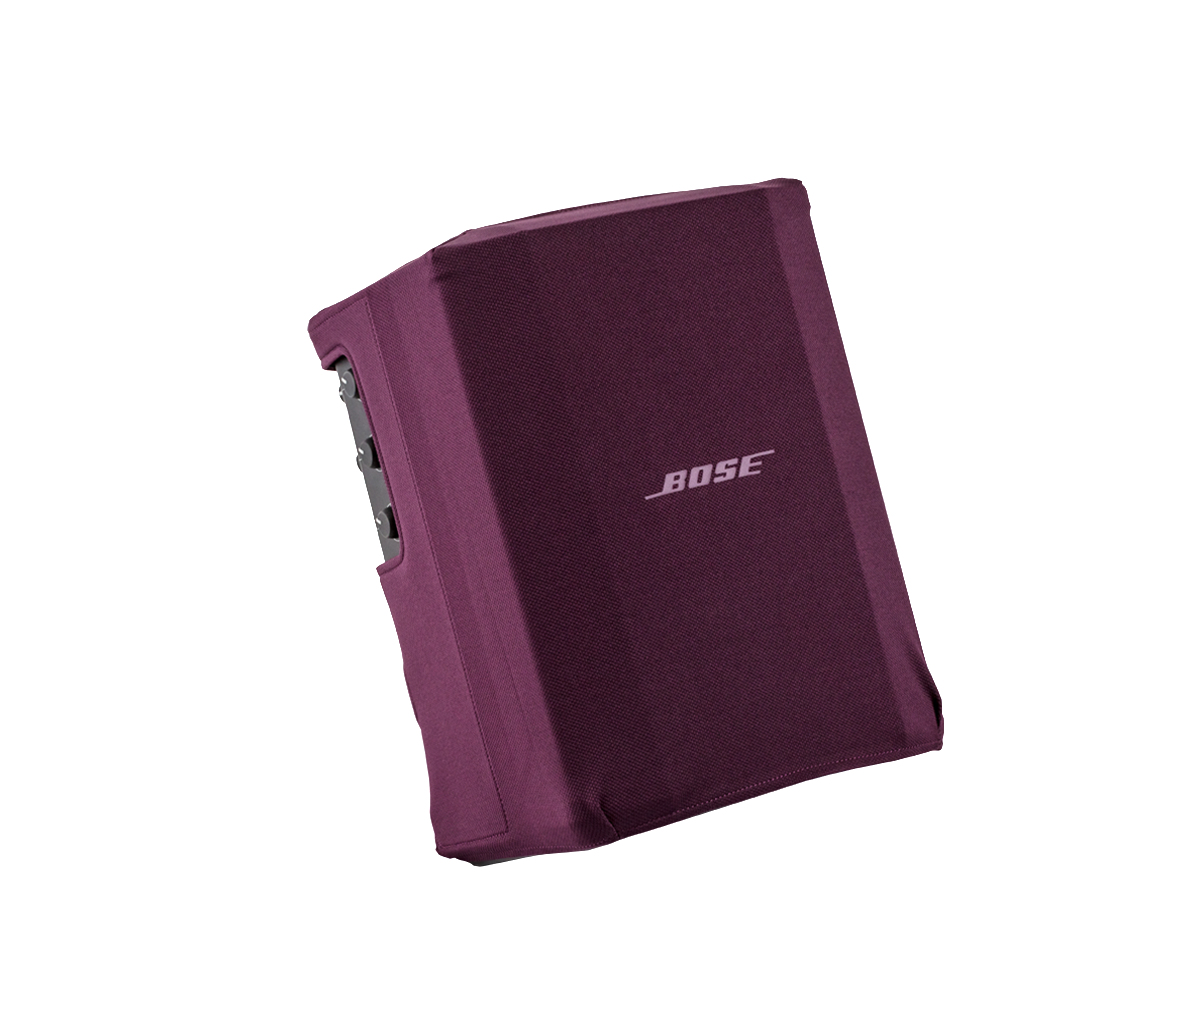 Bose 812896-0610 portable speaker case